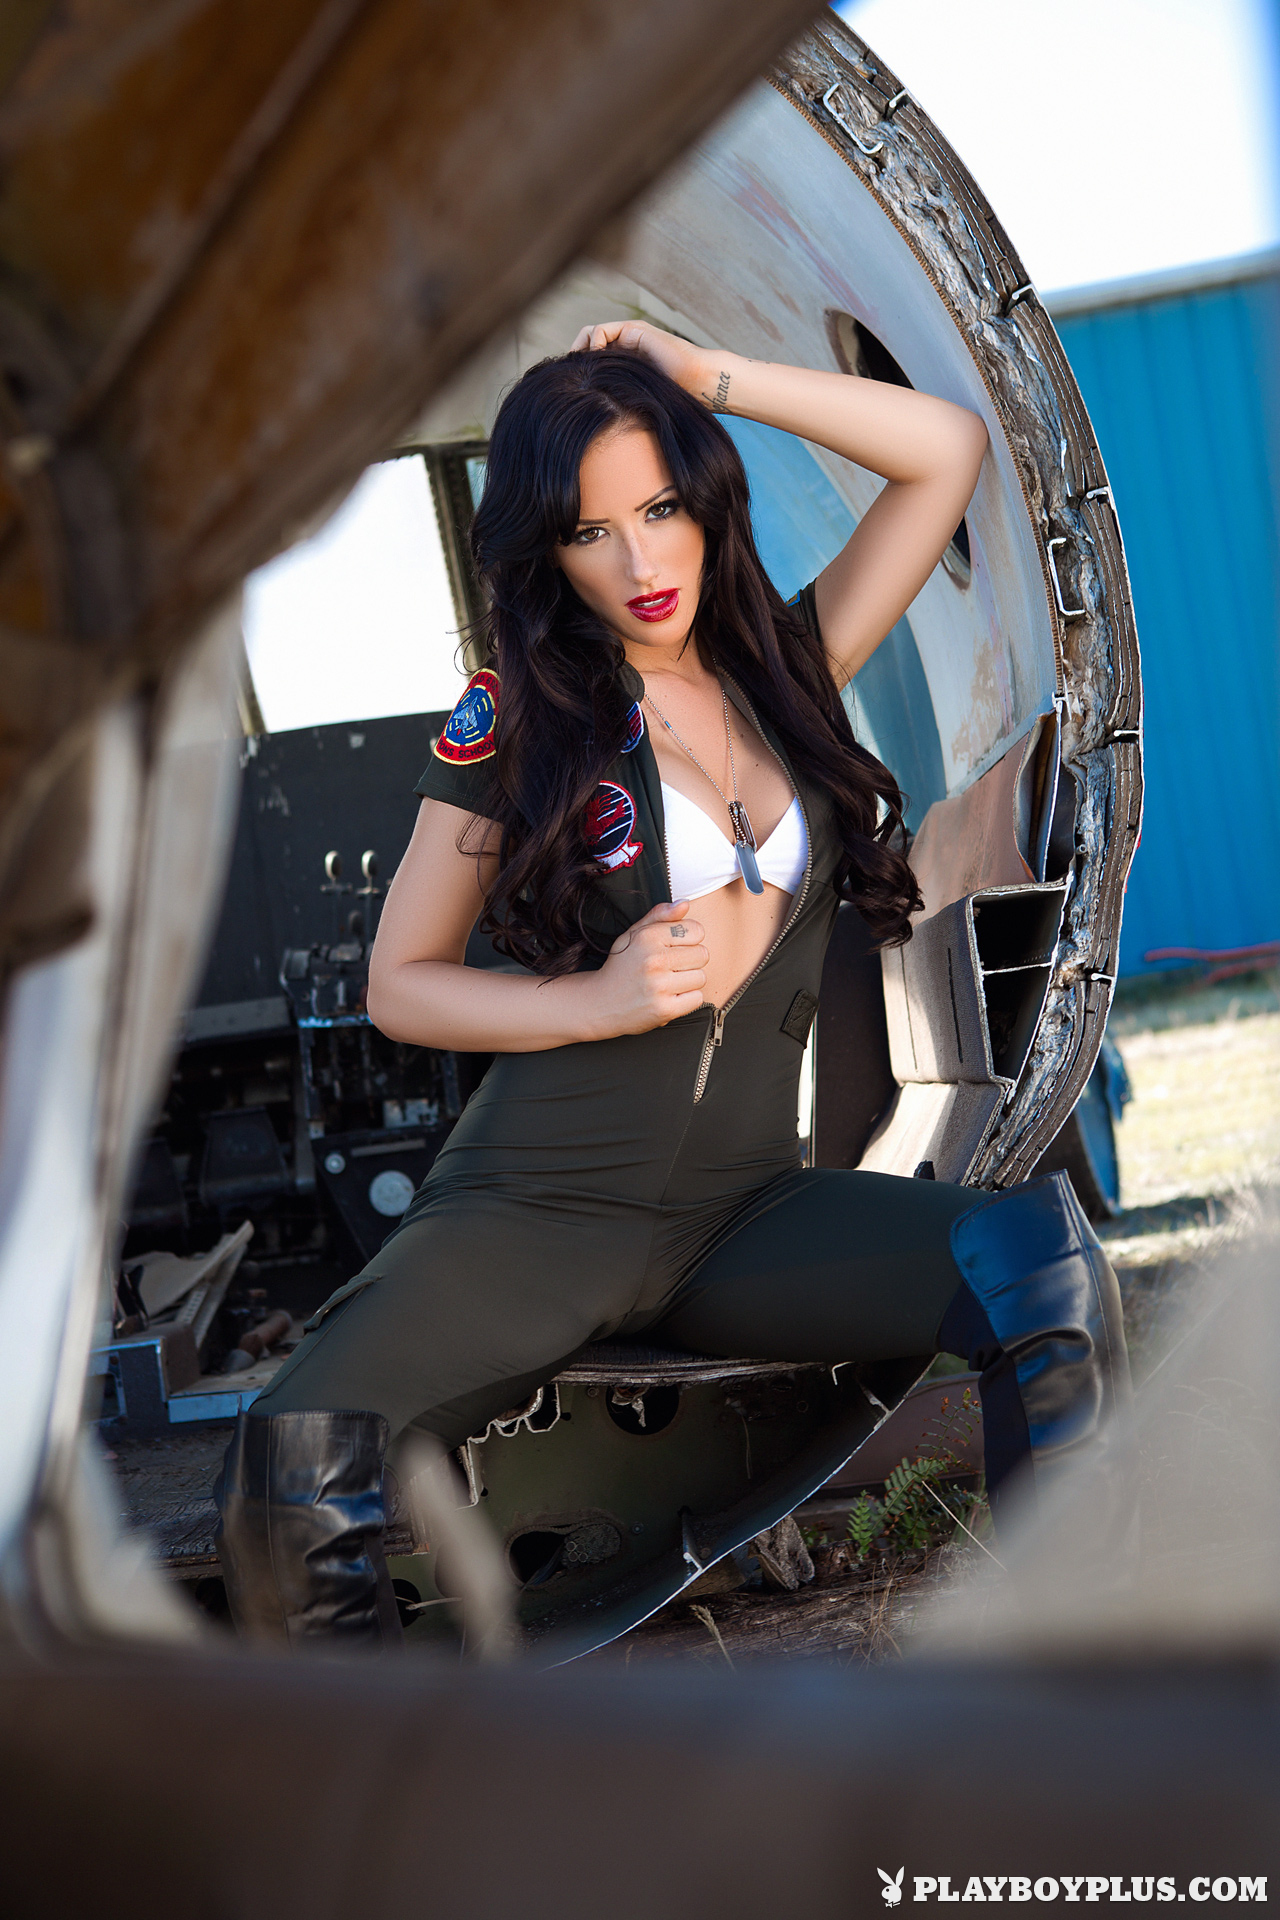 alyssa-bennett-military-pilot-naked-plane-junkyard-playboy-02